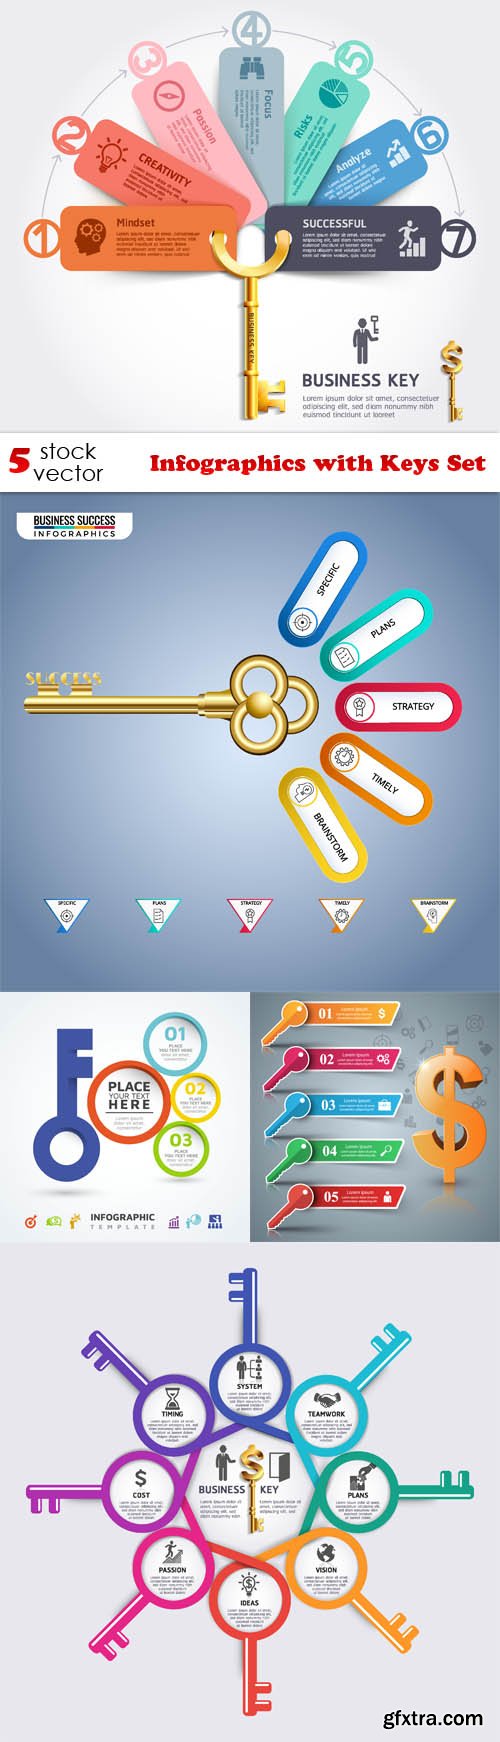 Vectors - Infographics with Keys Set